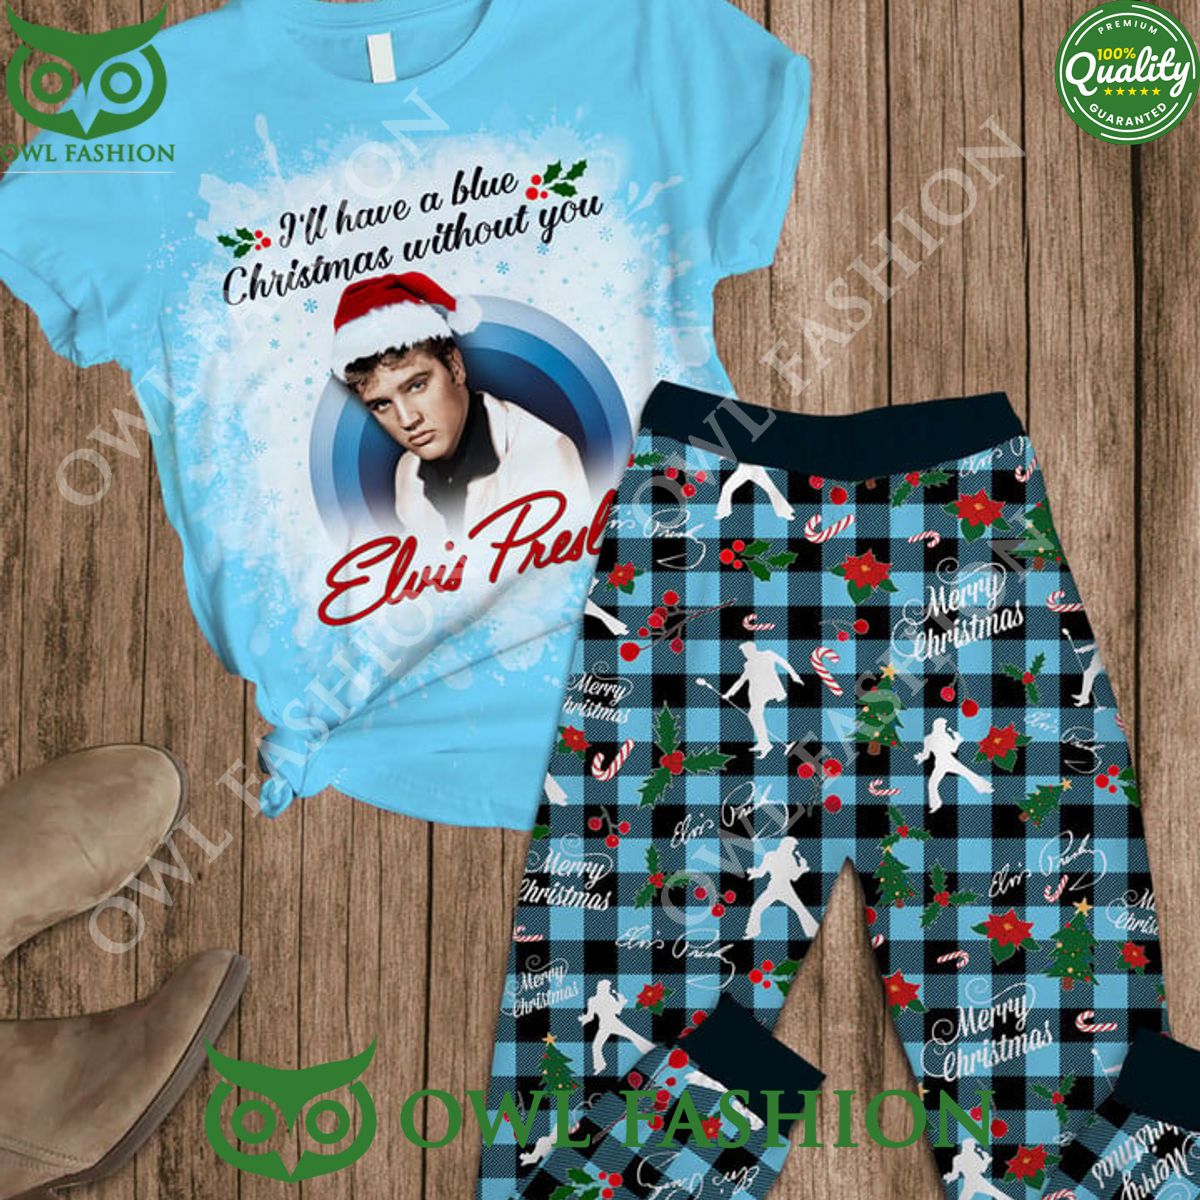 Blue Elvis Presley Christmas Pajamas set King of Rock and Roll